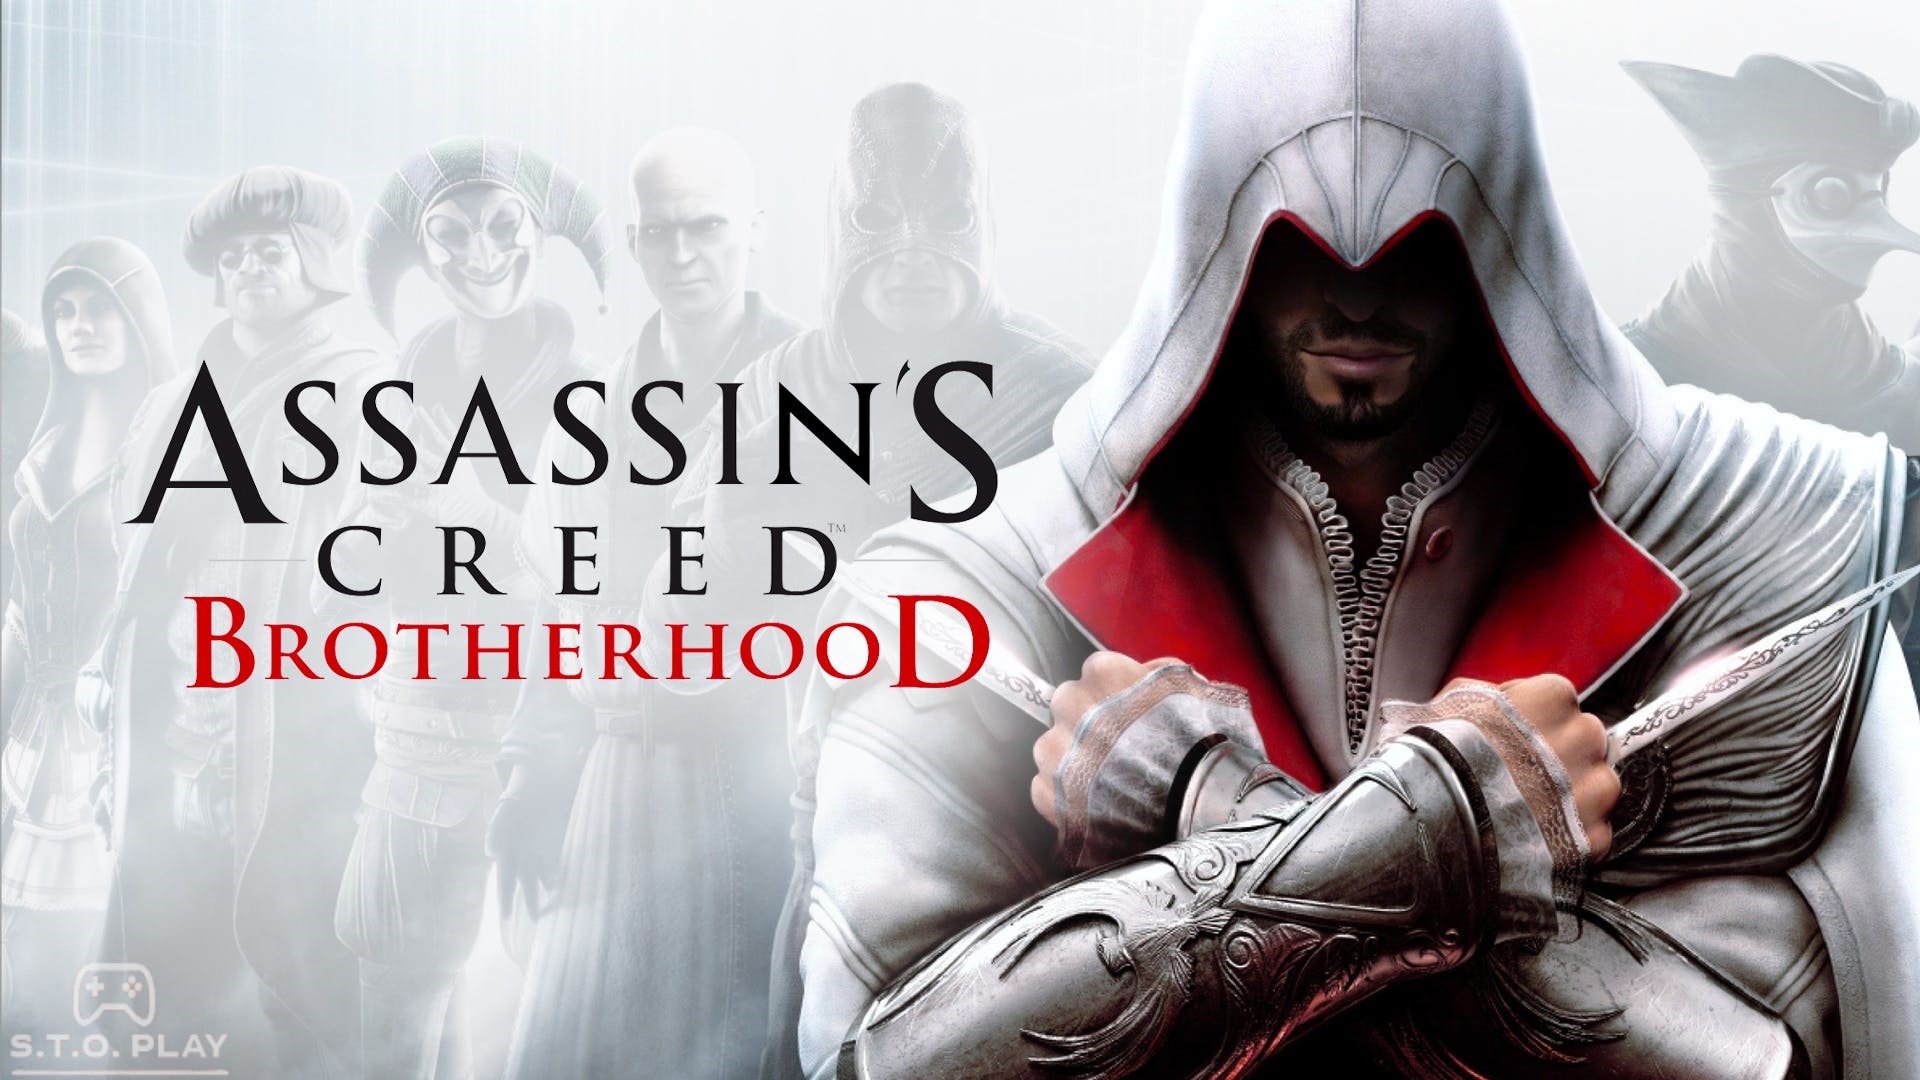 Assassin brotherhood прохождение. Код да Винчи ассасин братство крови. Assassin's Creed Brotherhood ps4. Ассасин Крид братство крови Эцио. Assassins Creed Brotherhood Ezio collection.